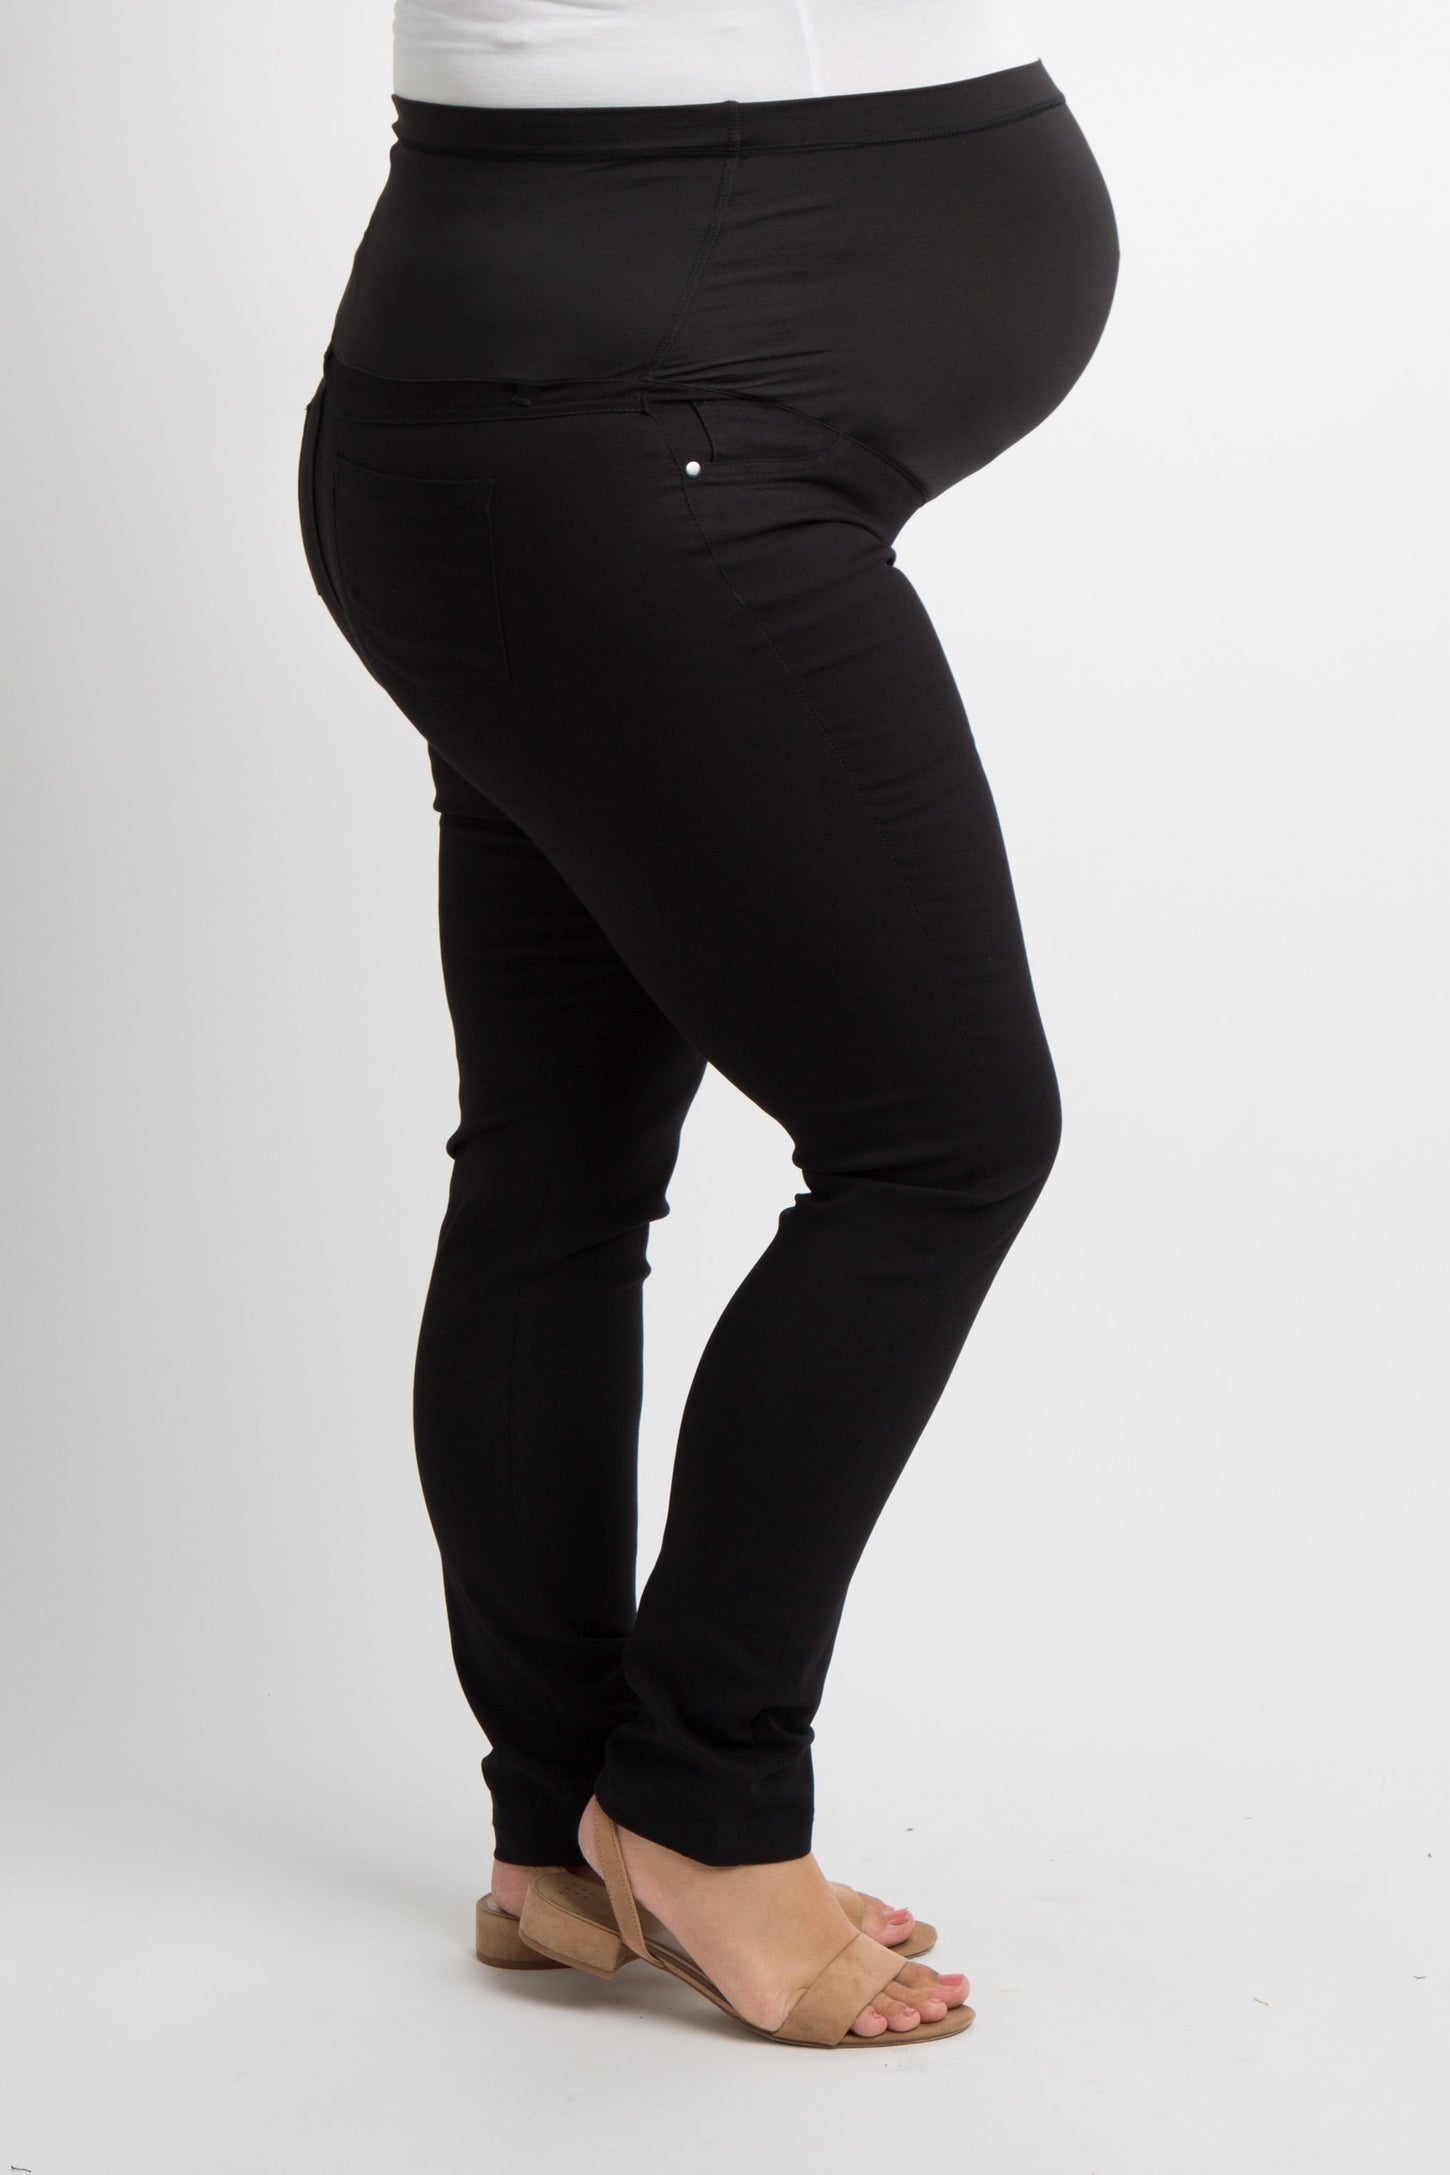 PinkBlush Black Solid Plus Maternity Pants